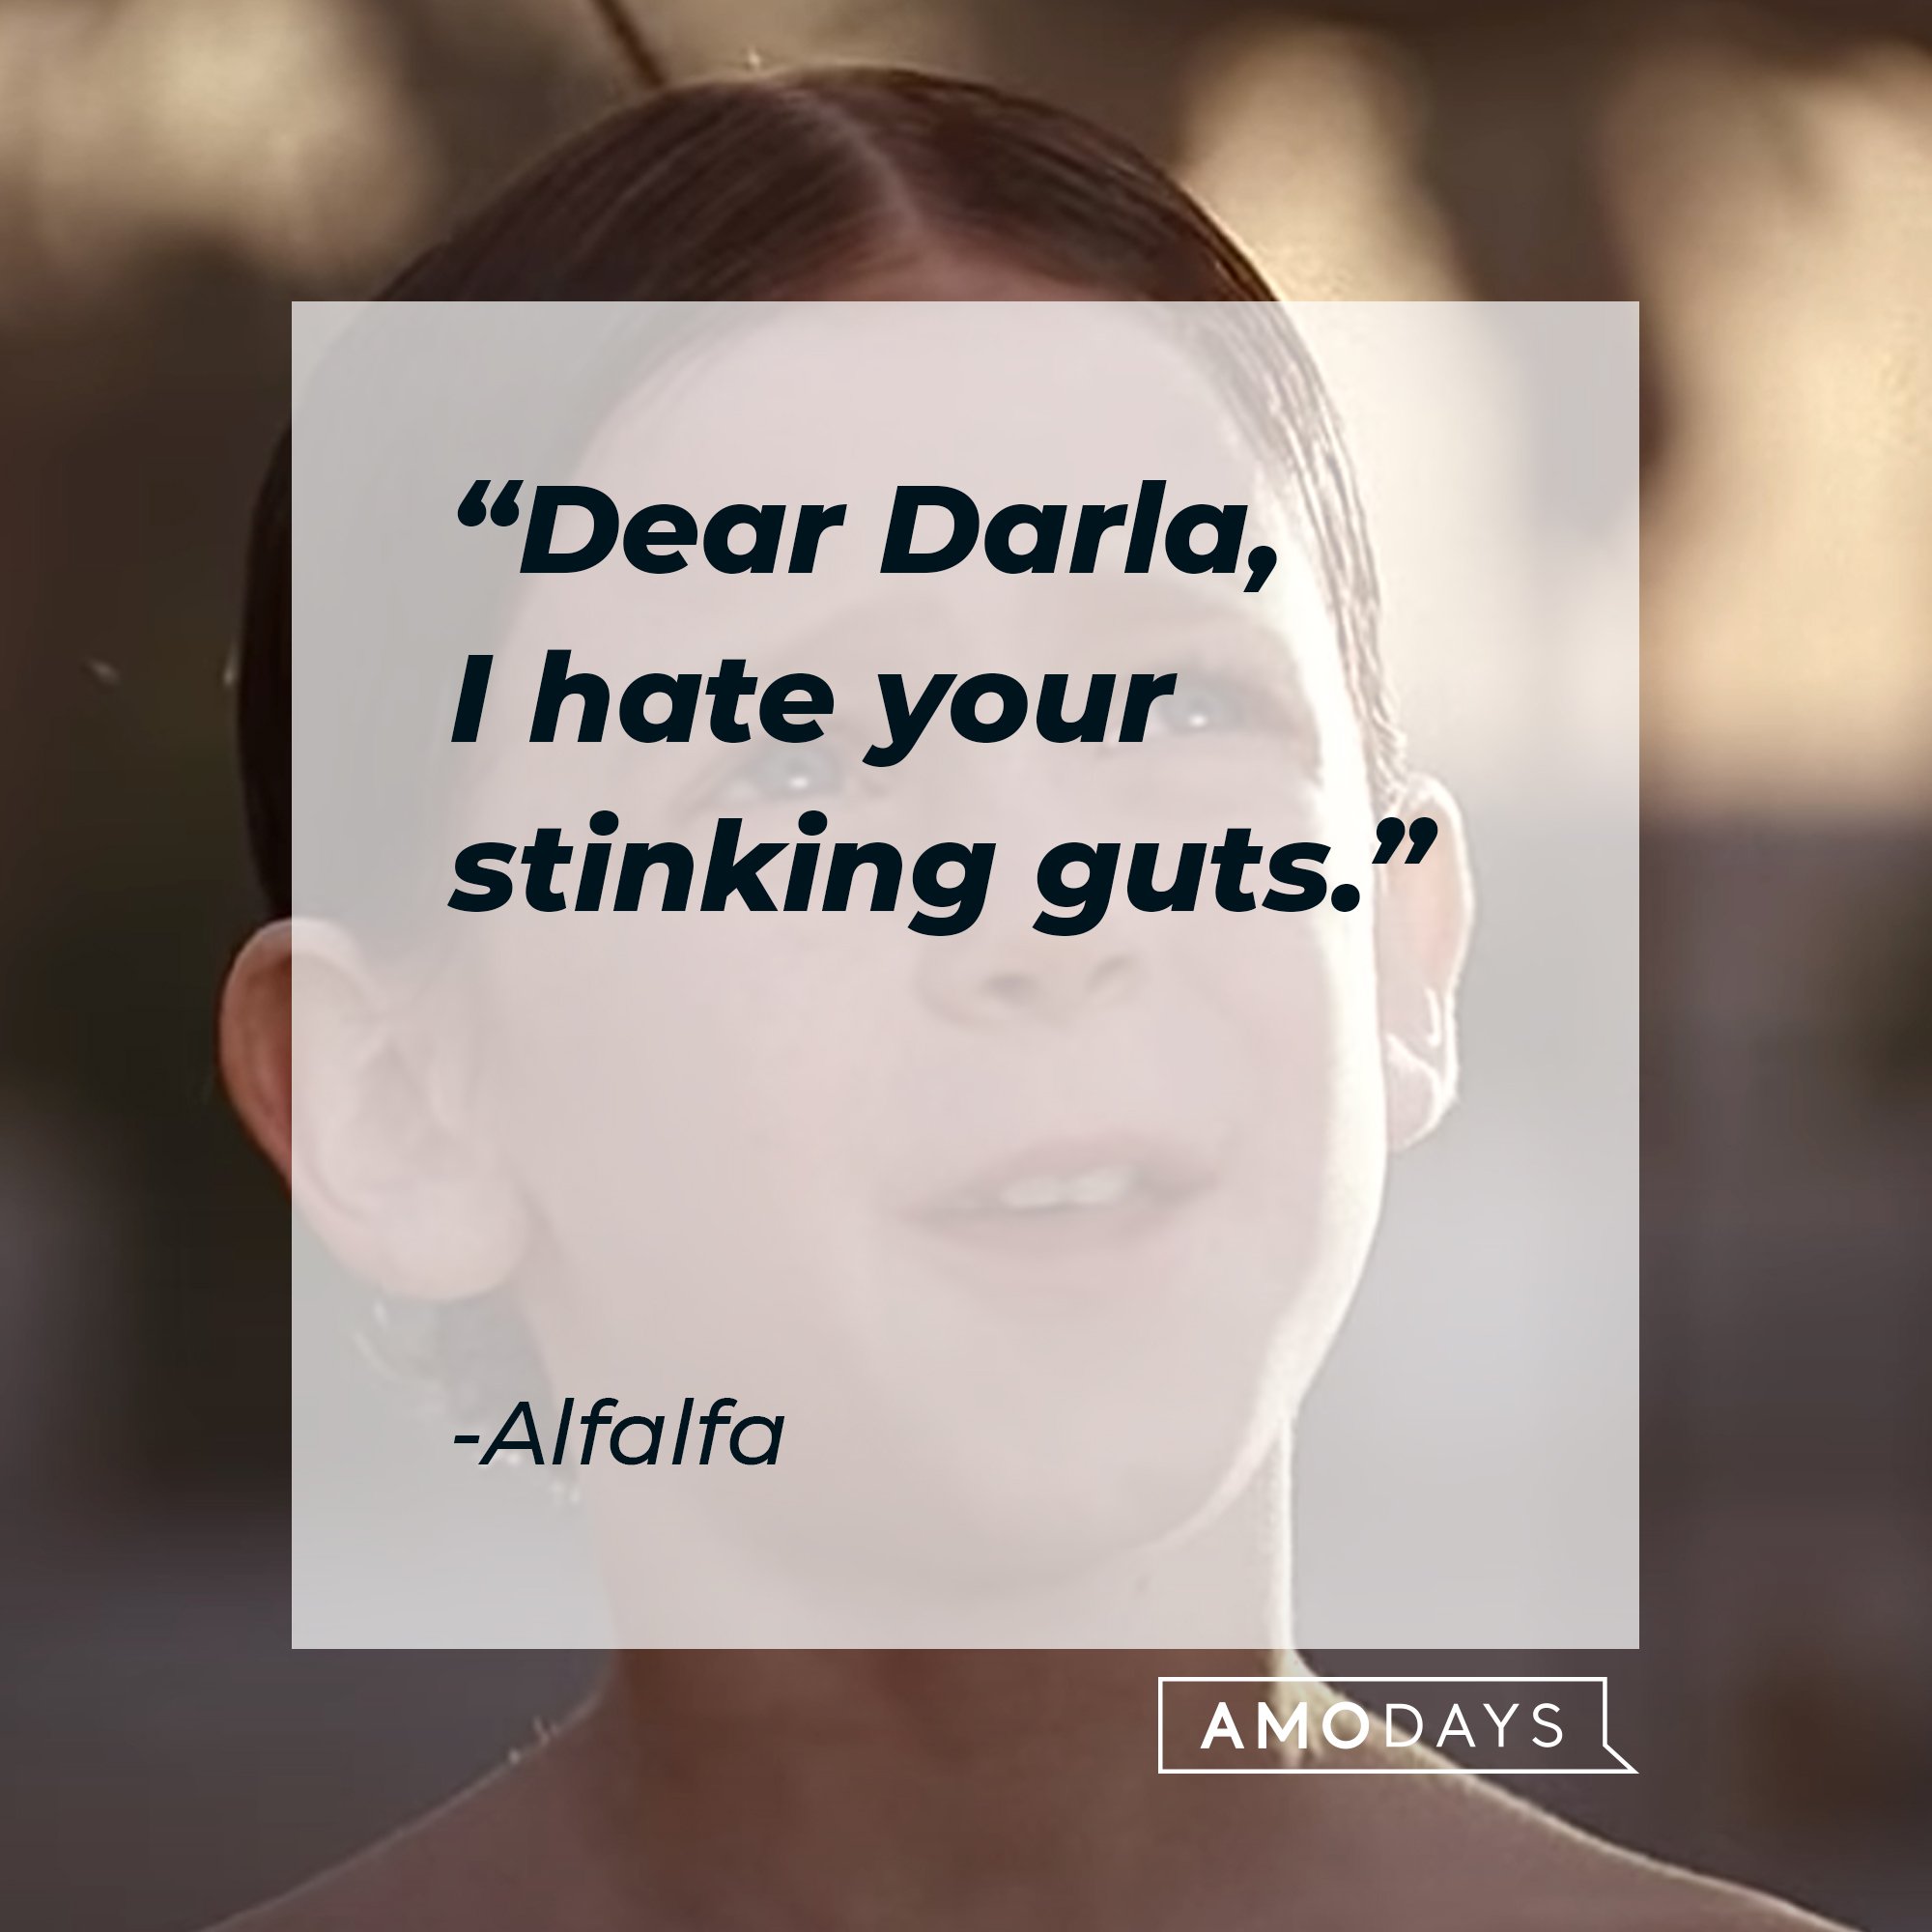 Alfalfa’s quote: "Dear Darla, I hate your stinking guts." | Image: AmoDays